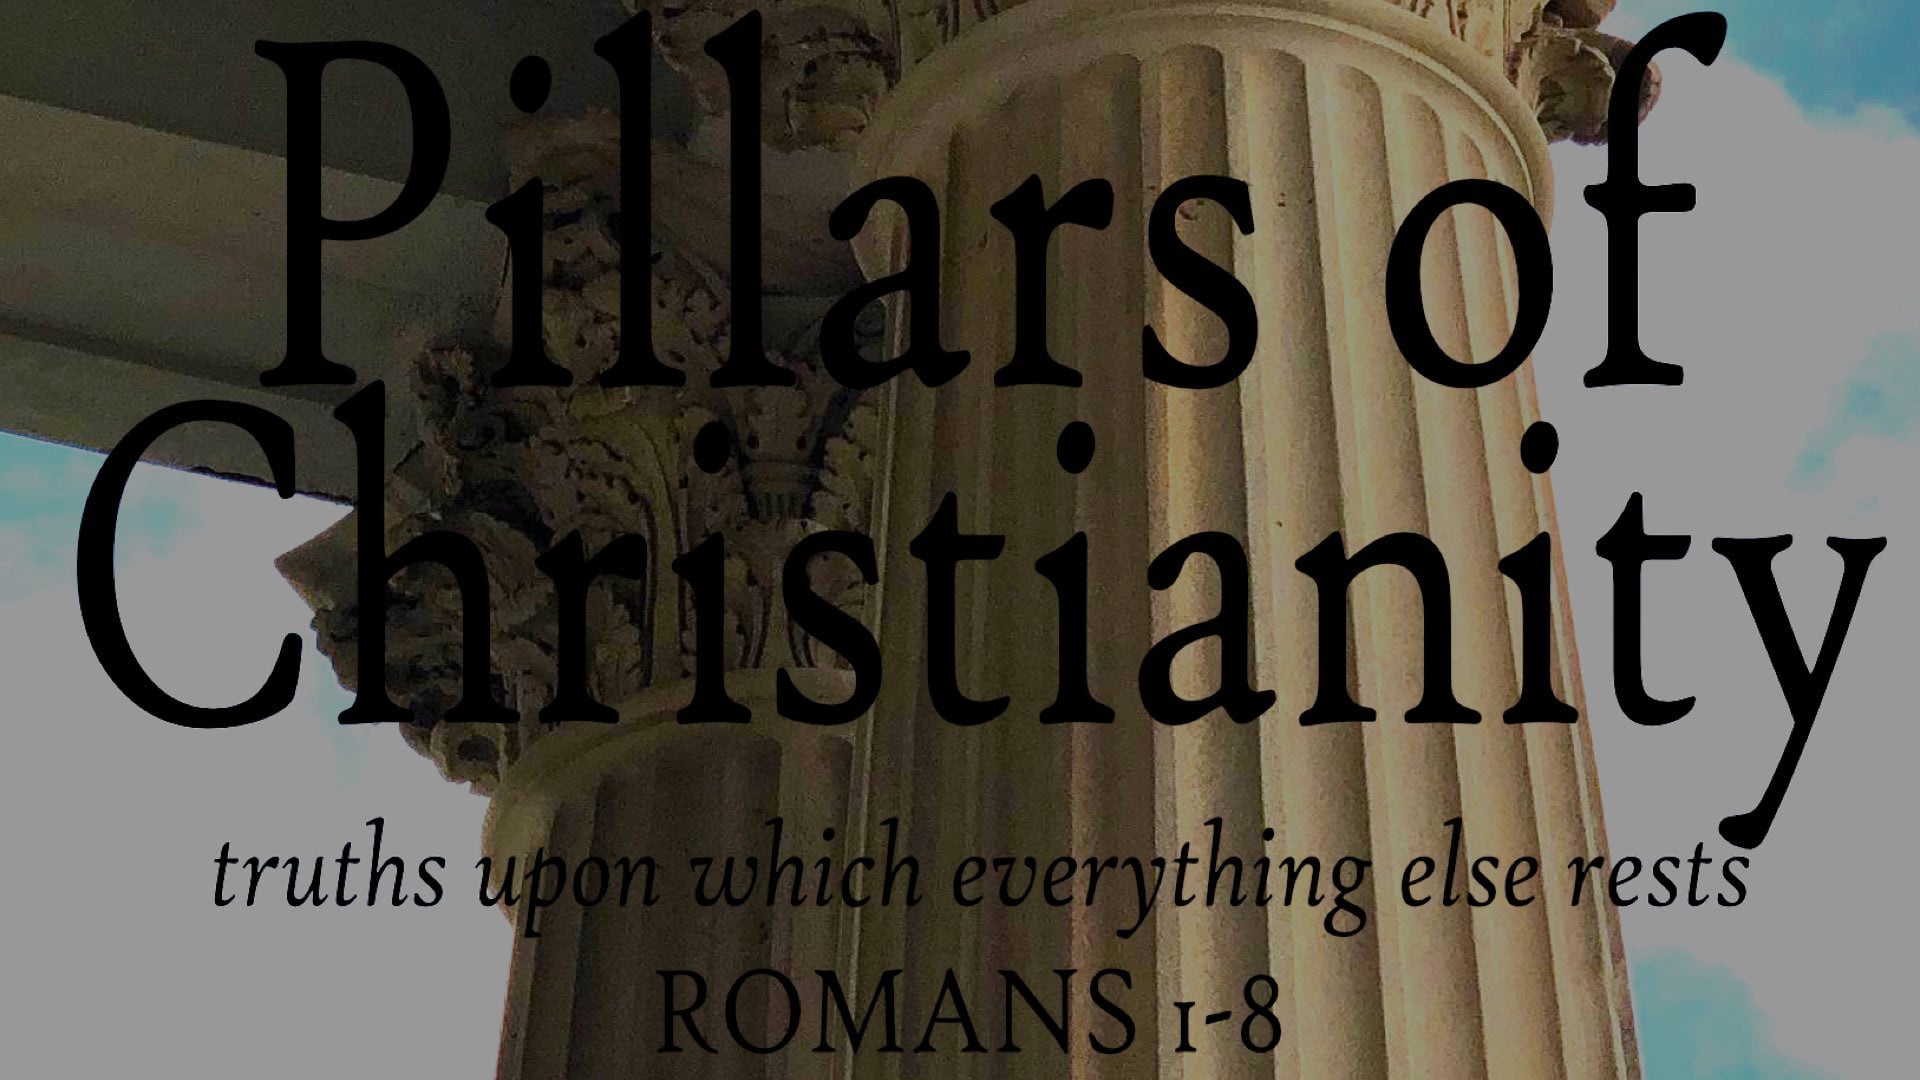 June 12, 2022 Pillars of Christianity, Part 1